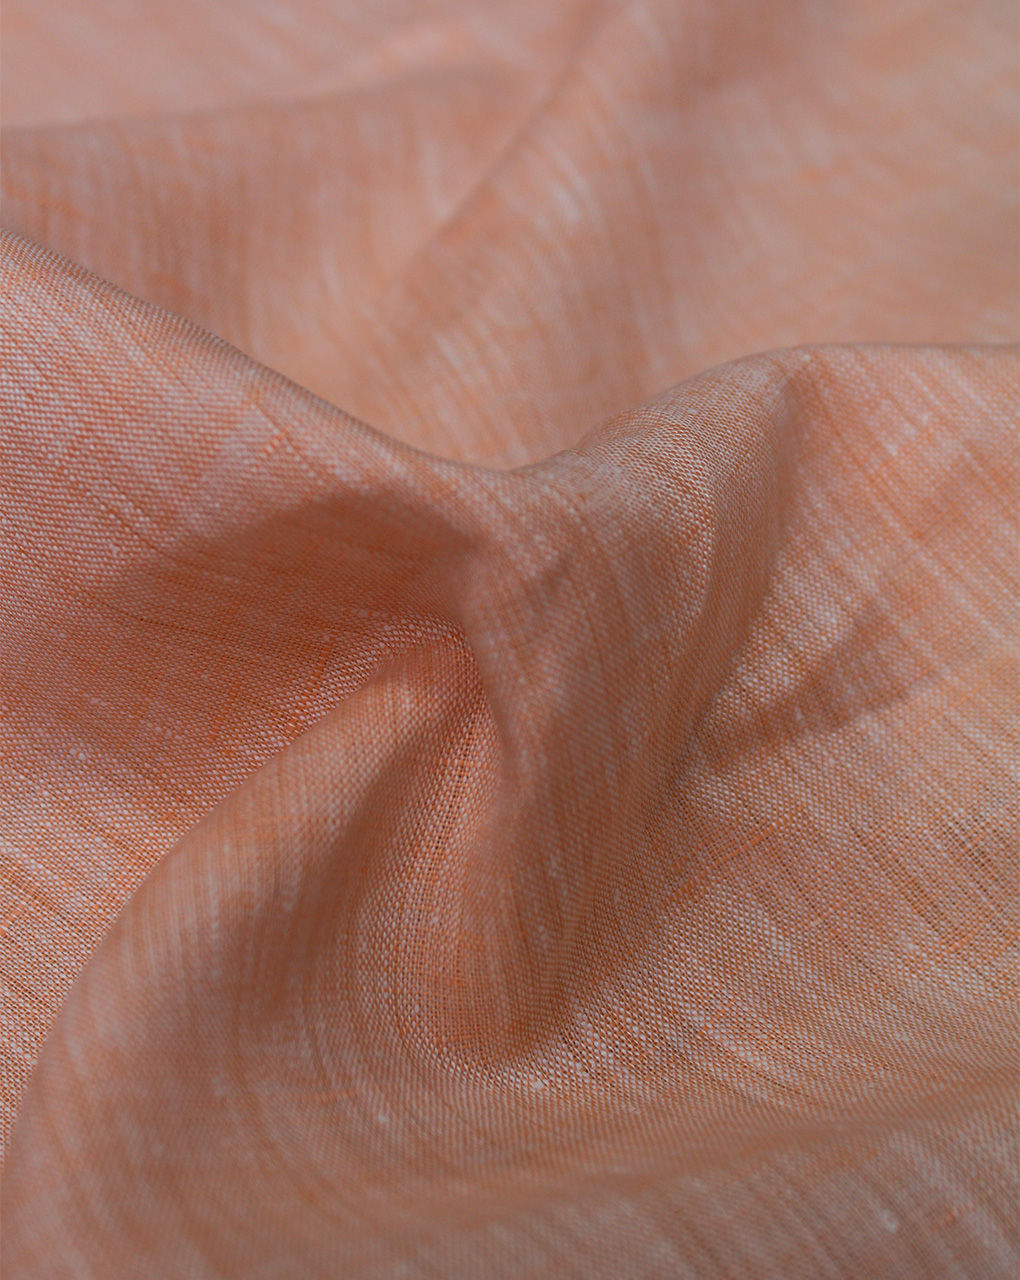 Candy Orange Plain Yarn Dyed Linen Fabric